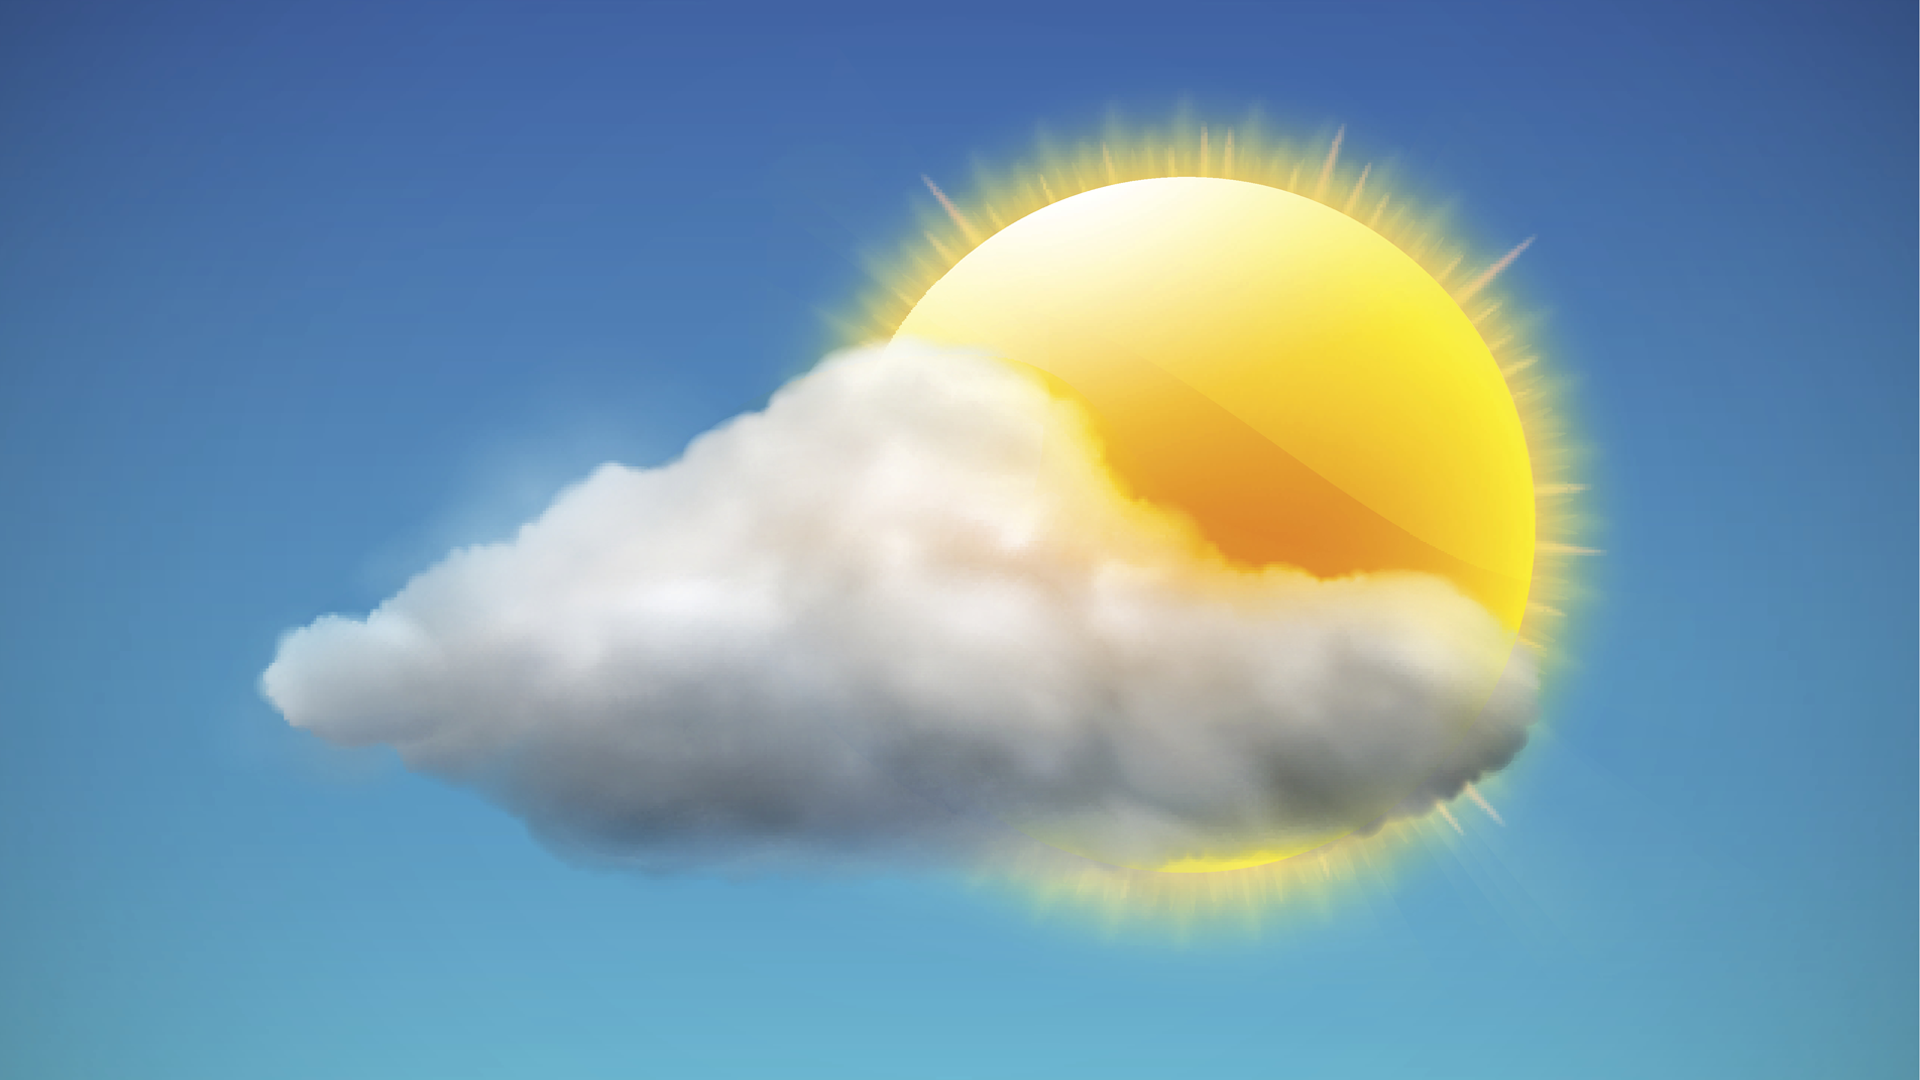 Прогноз погоды солнце. Солнце в облаках. Солнышко с облаками. Солнечная погода. Облачно с прояснениями солнца.